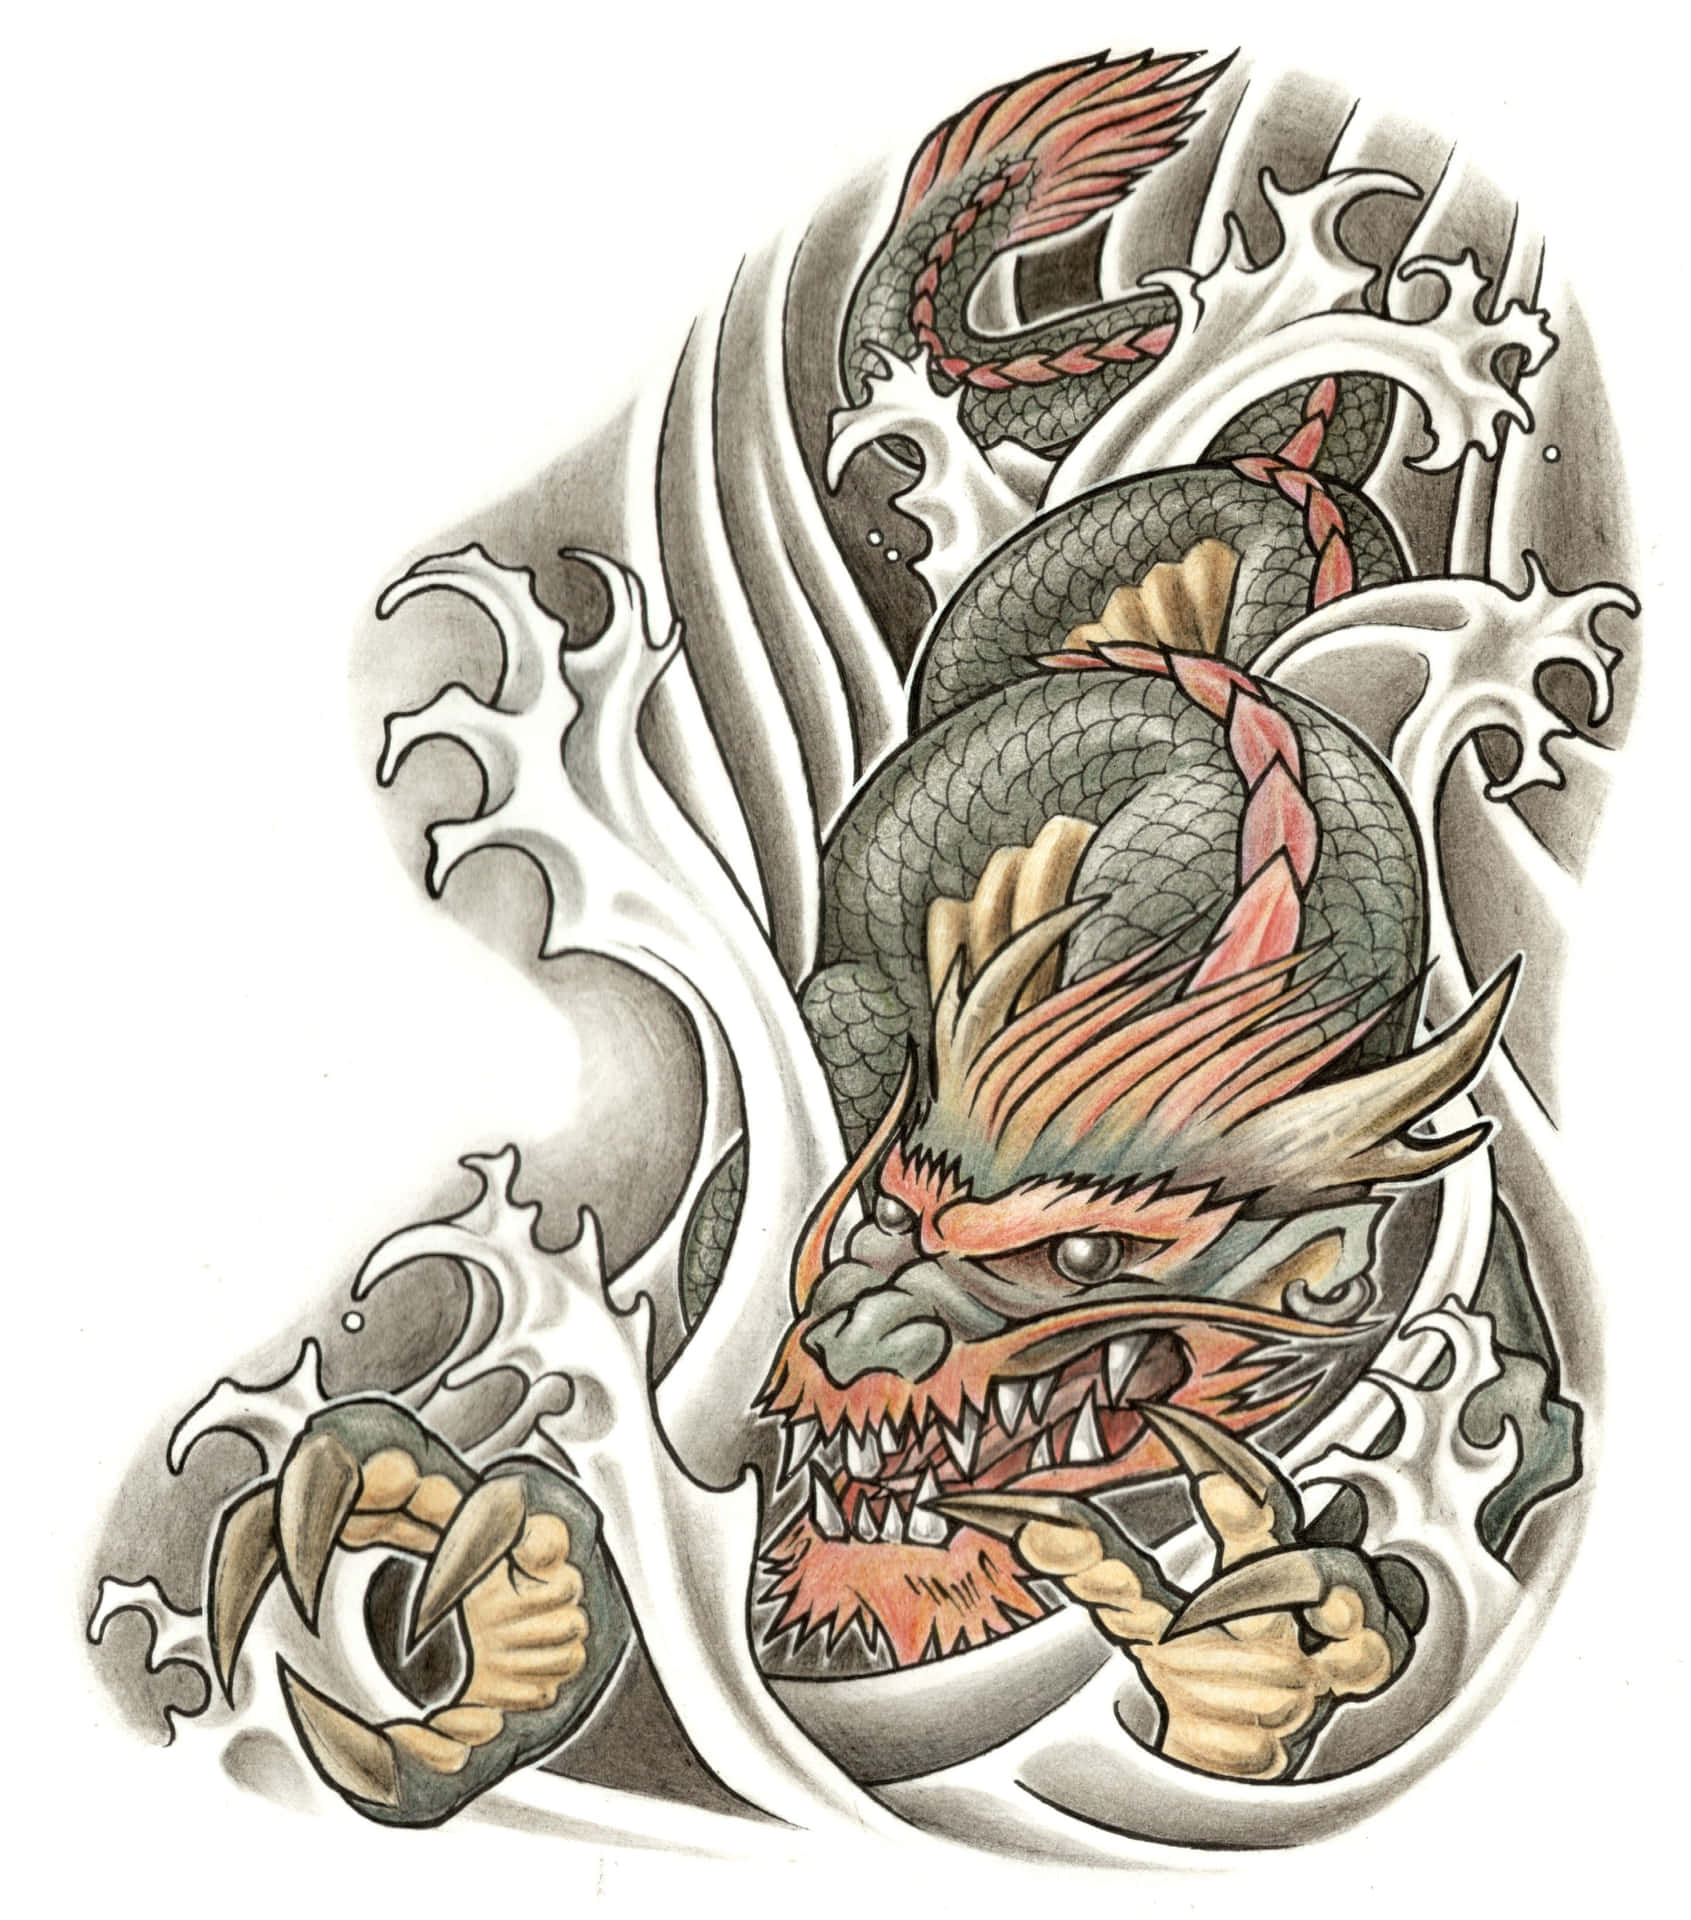 Tribal dragon tattoo design Royalty Free Vector Image